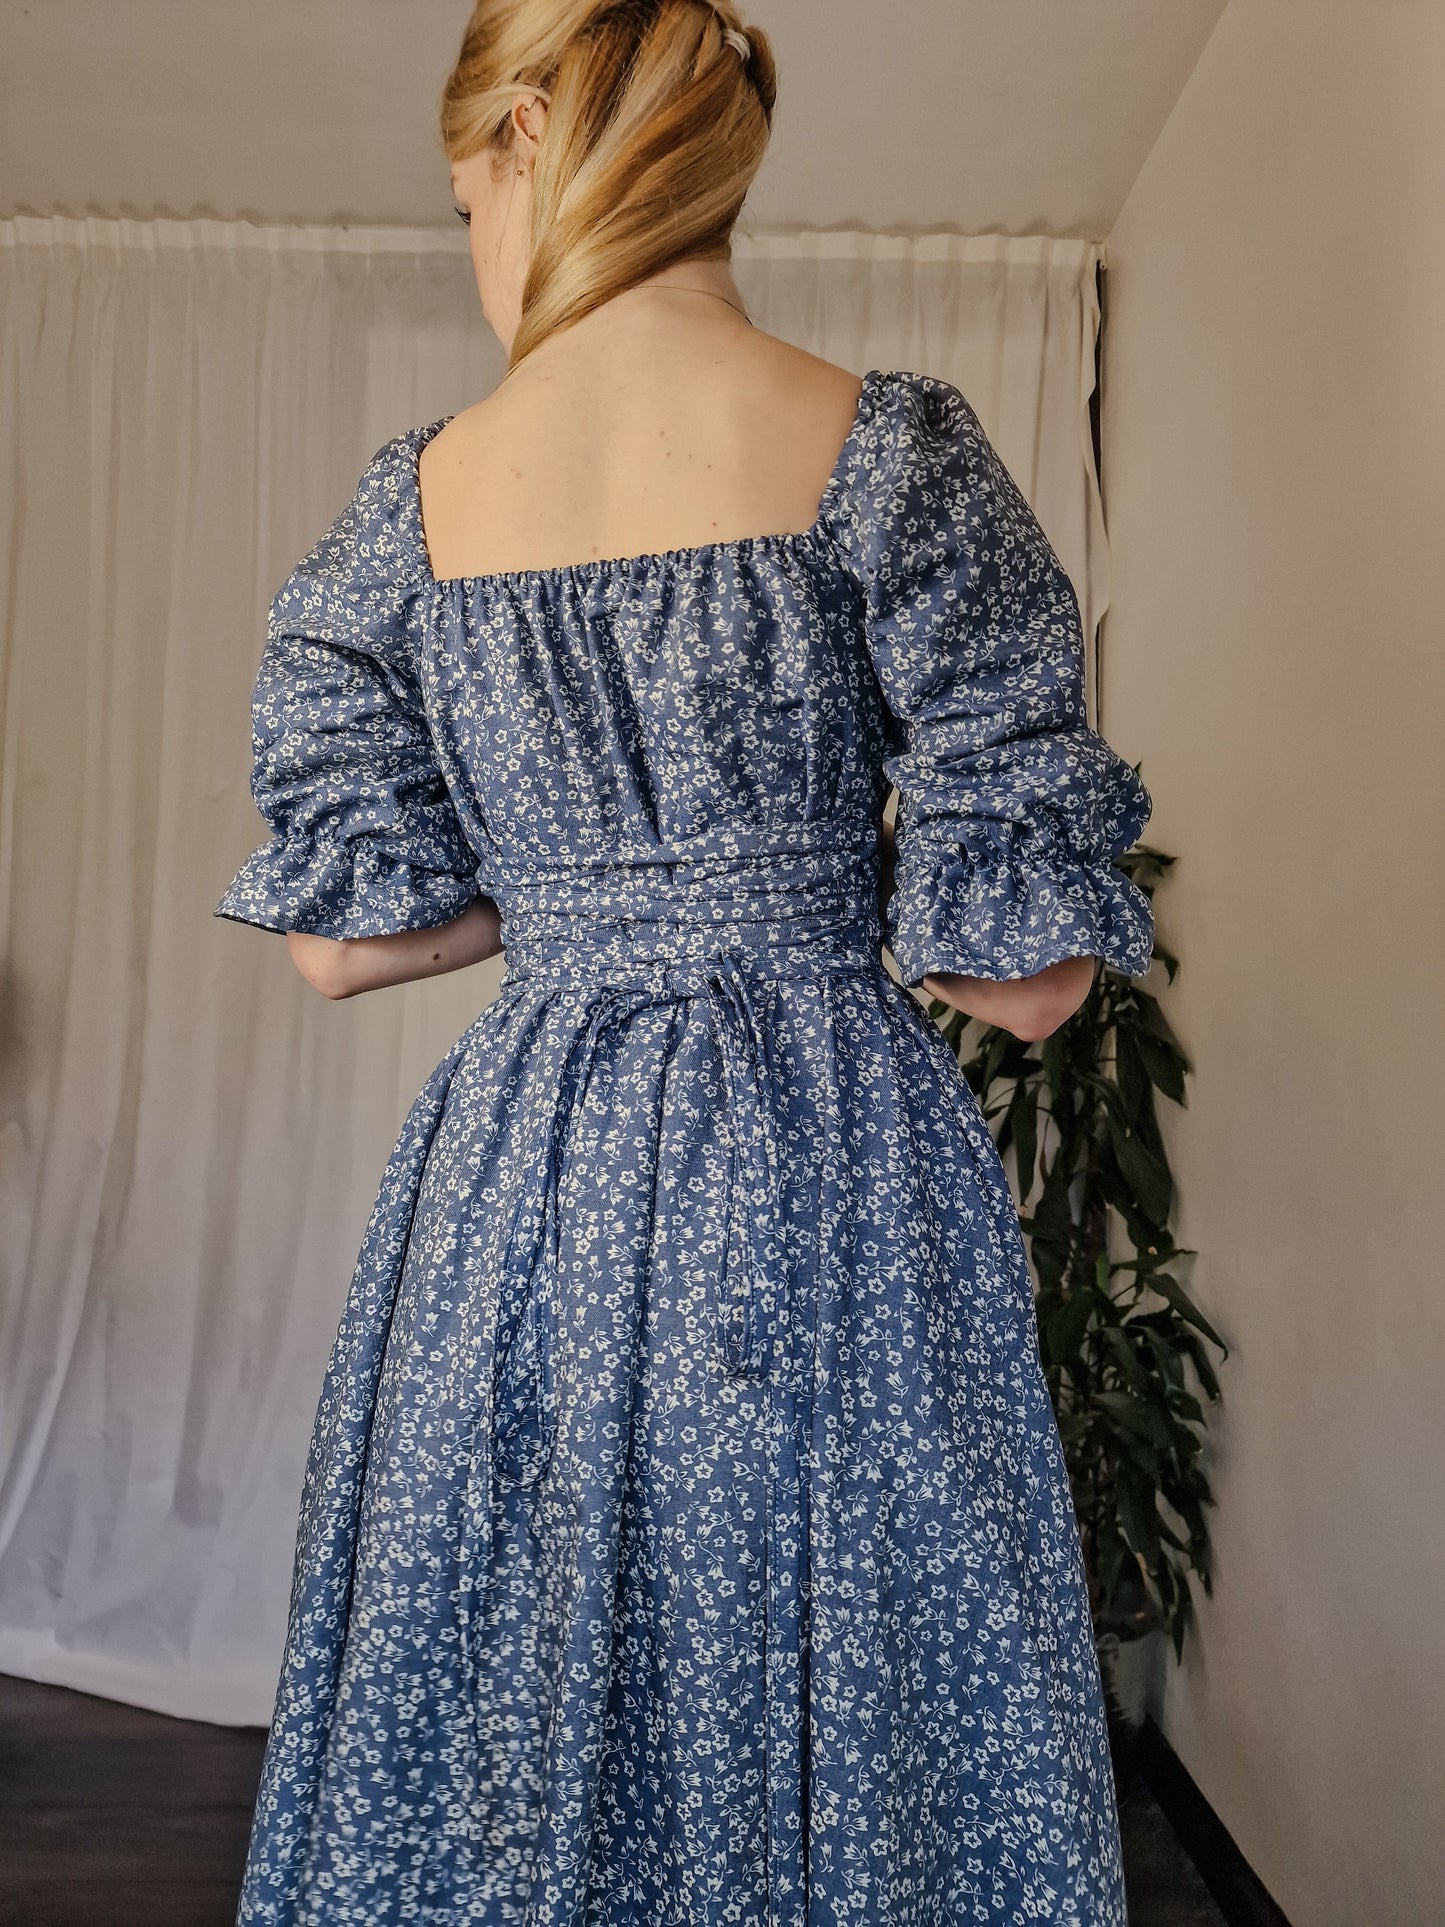 Milkmaid Dress (Lace Up Back)